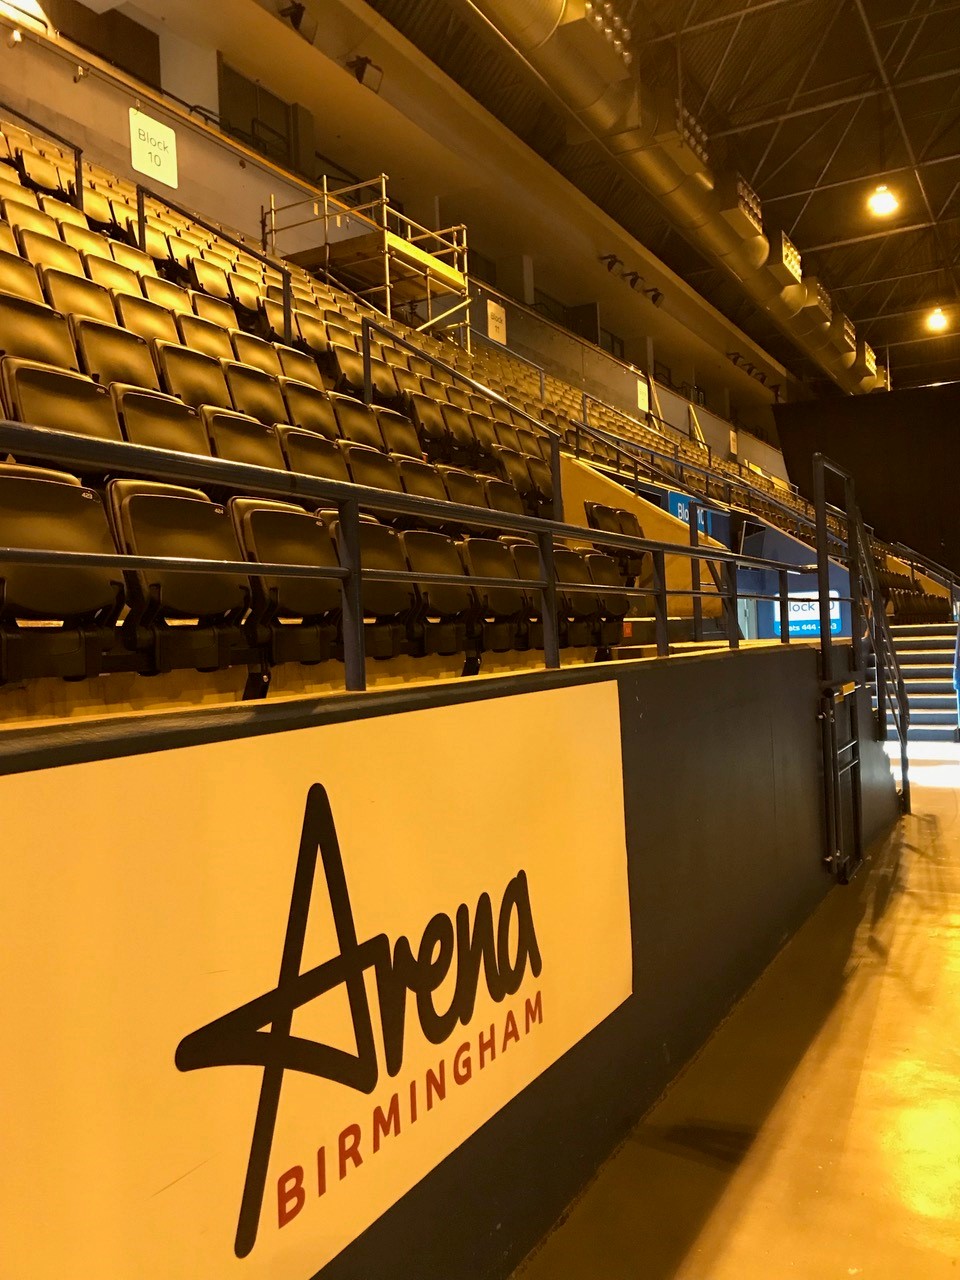 Tamworth Scaffolding: National Indoor Arena - Public Access Birmingham
